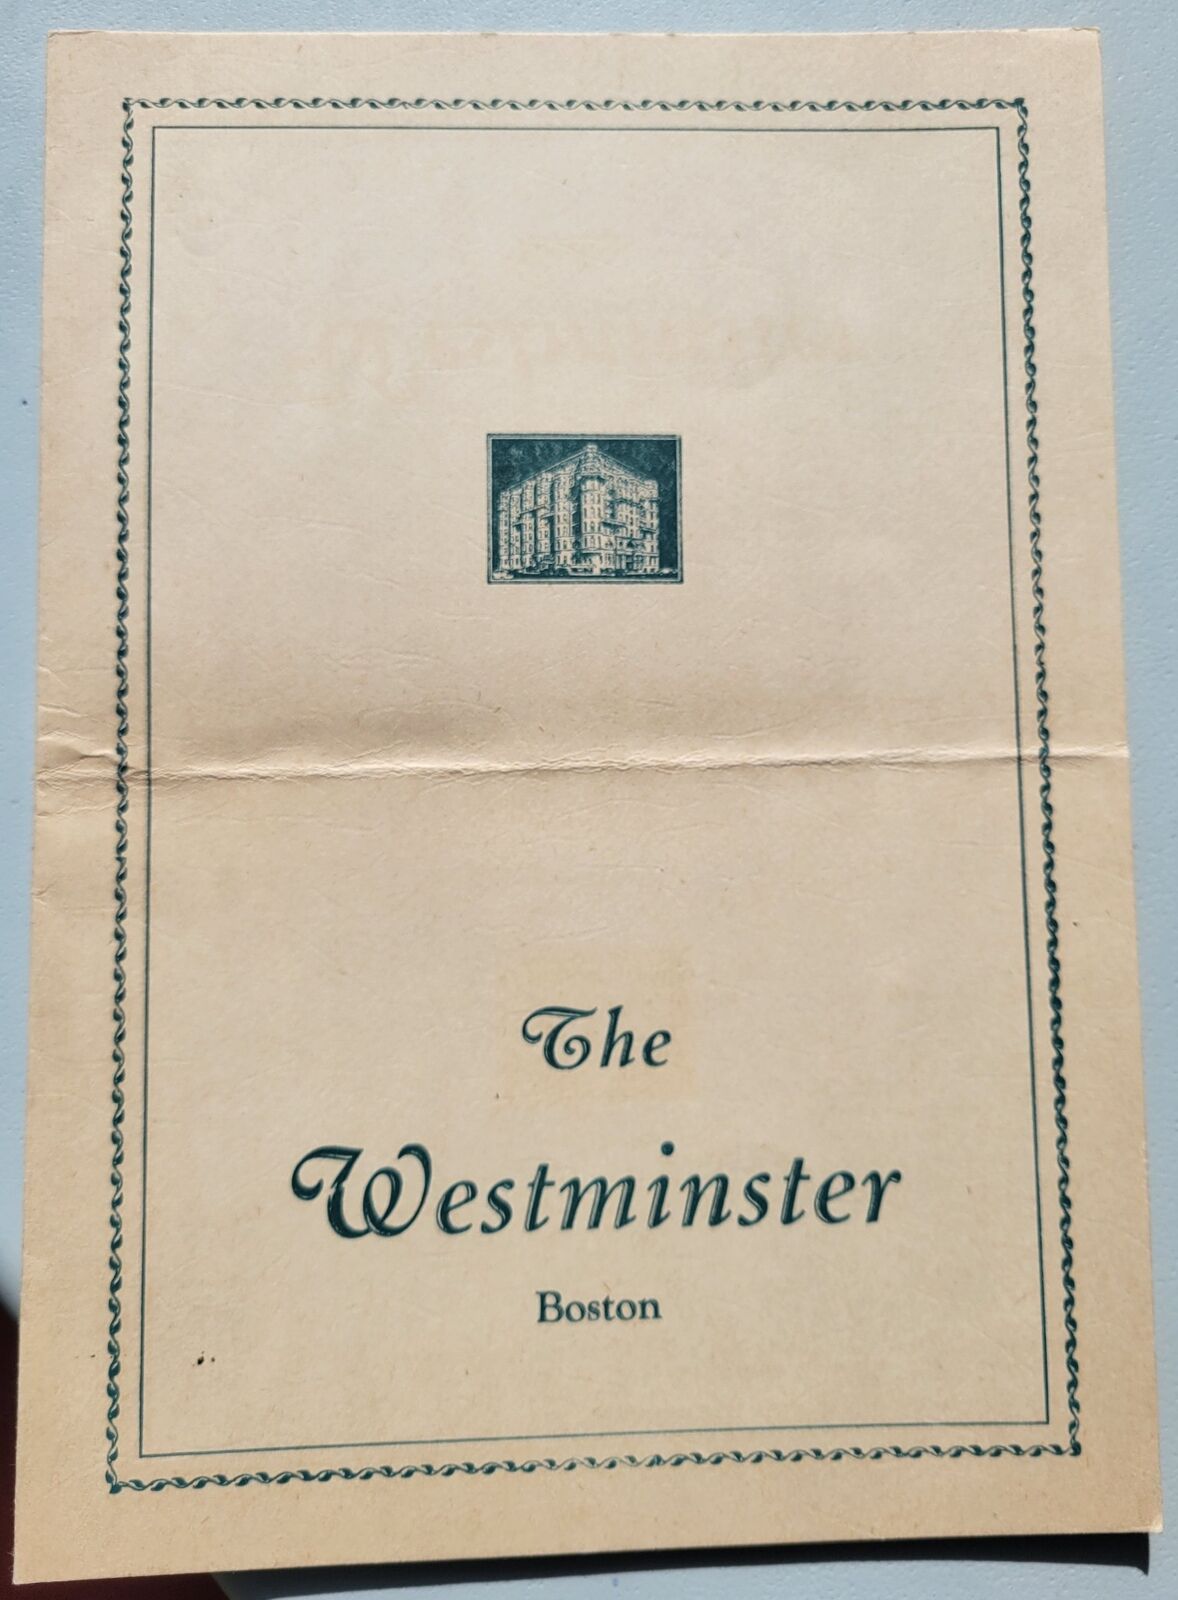 1938, The Westminster, Boston, Massachusetts, Menu, Placemat, Original, Vintage